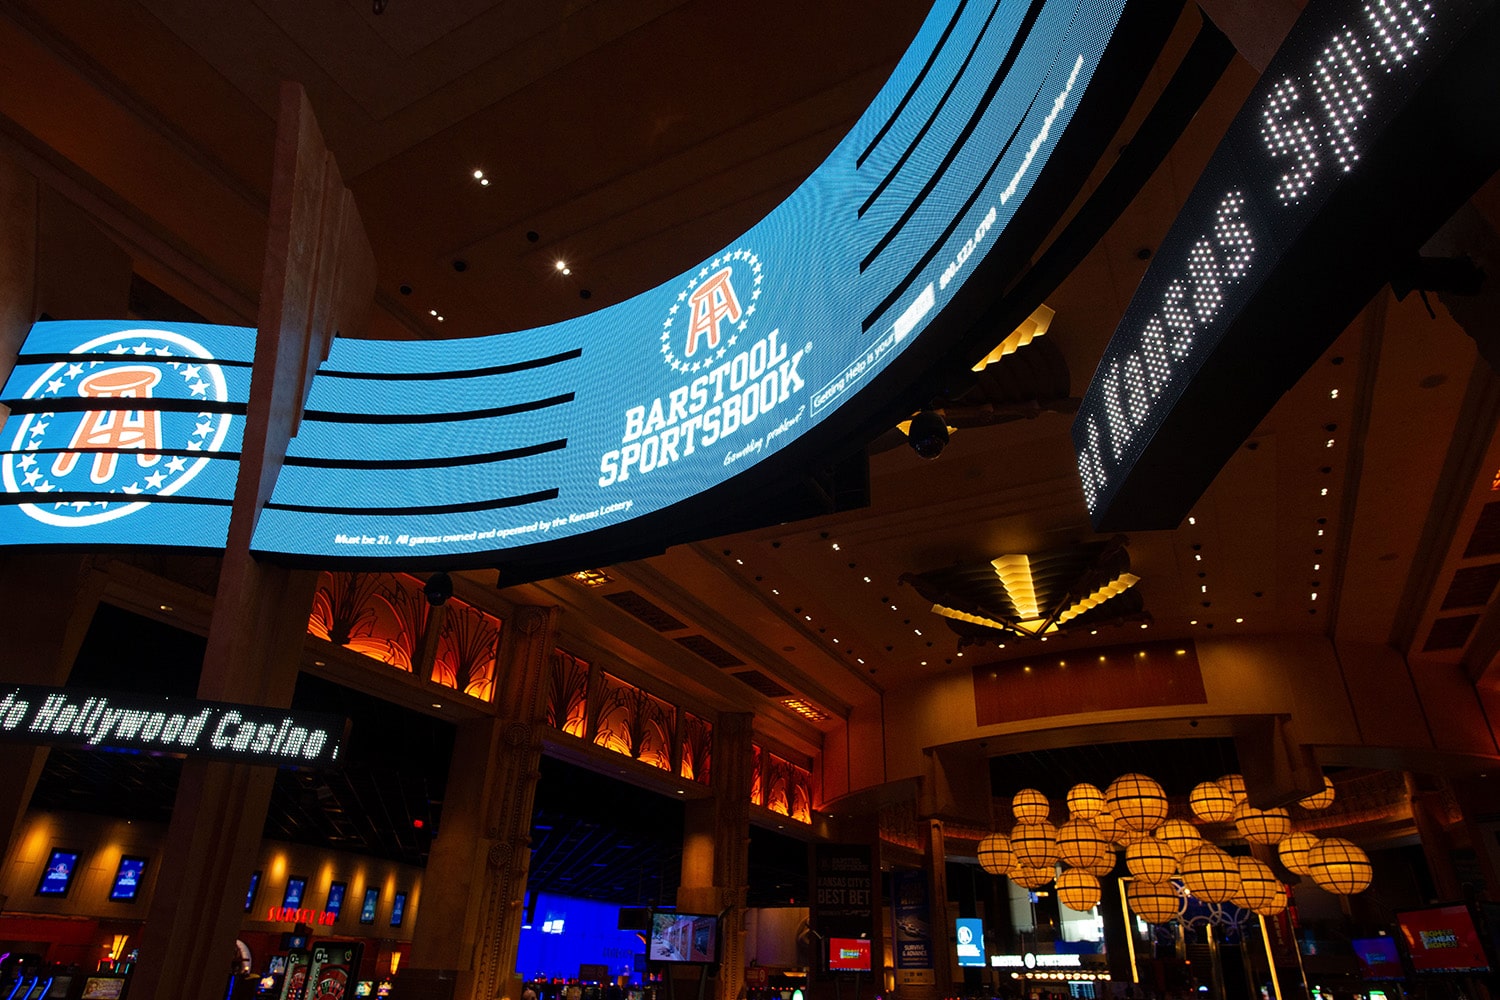 Digital signage for Barstool Sportsbook inside a casino.